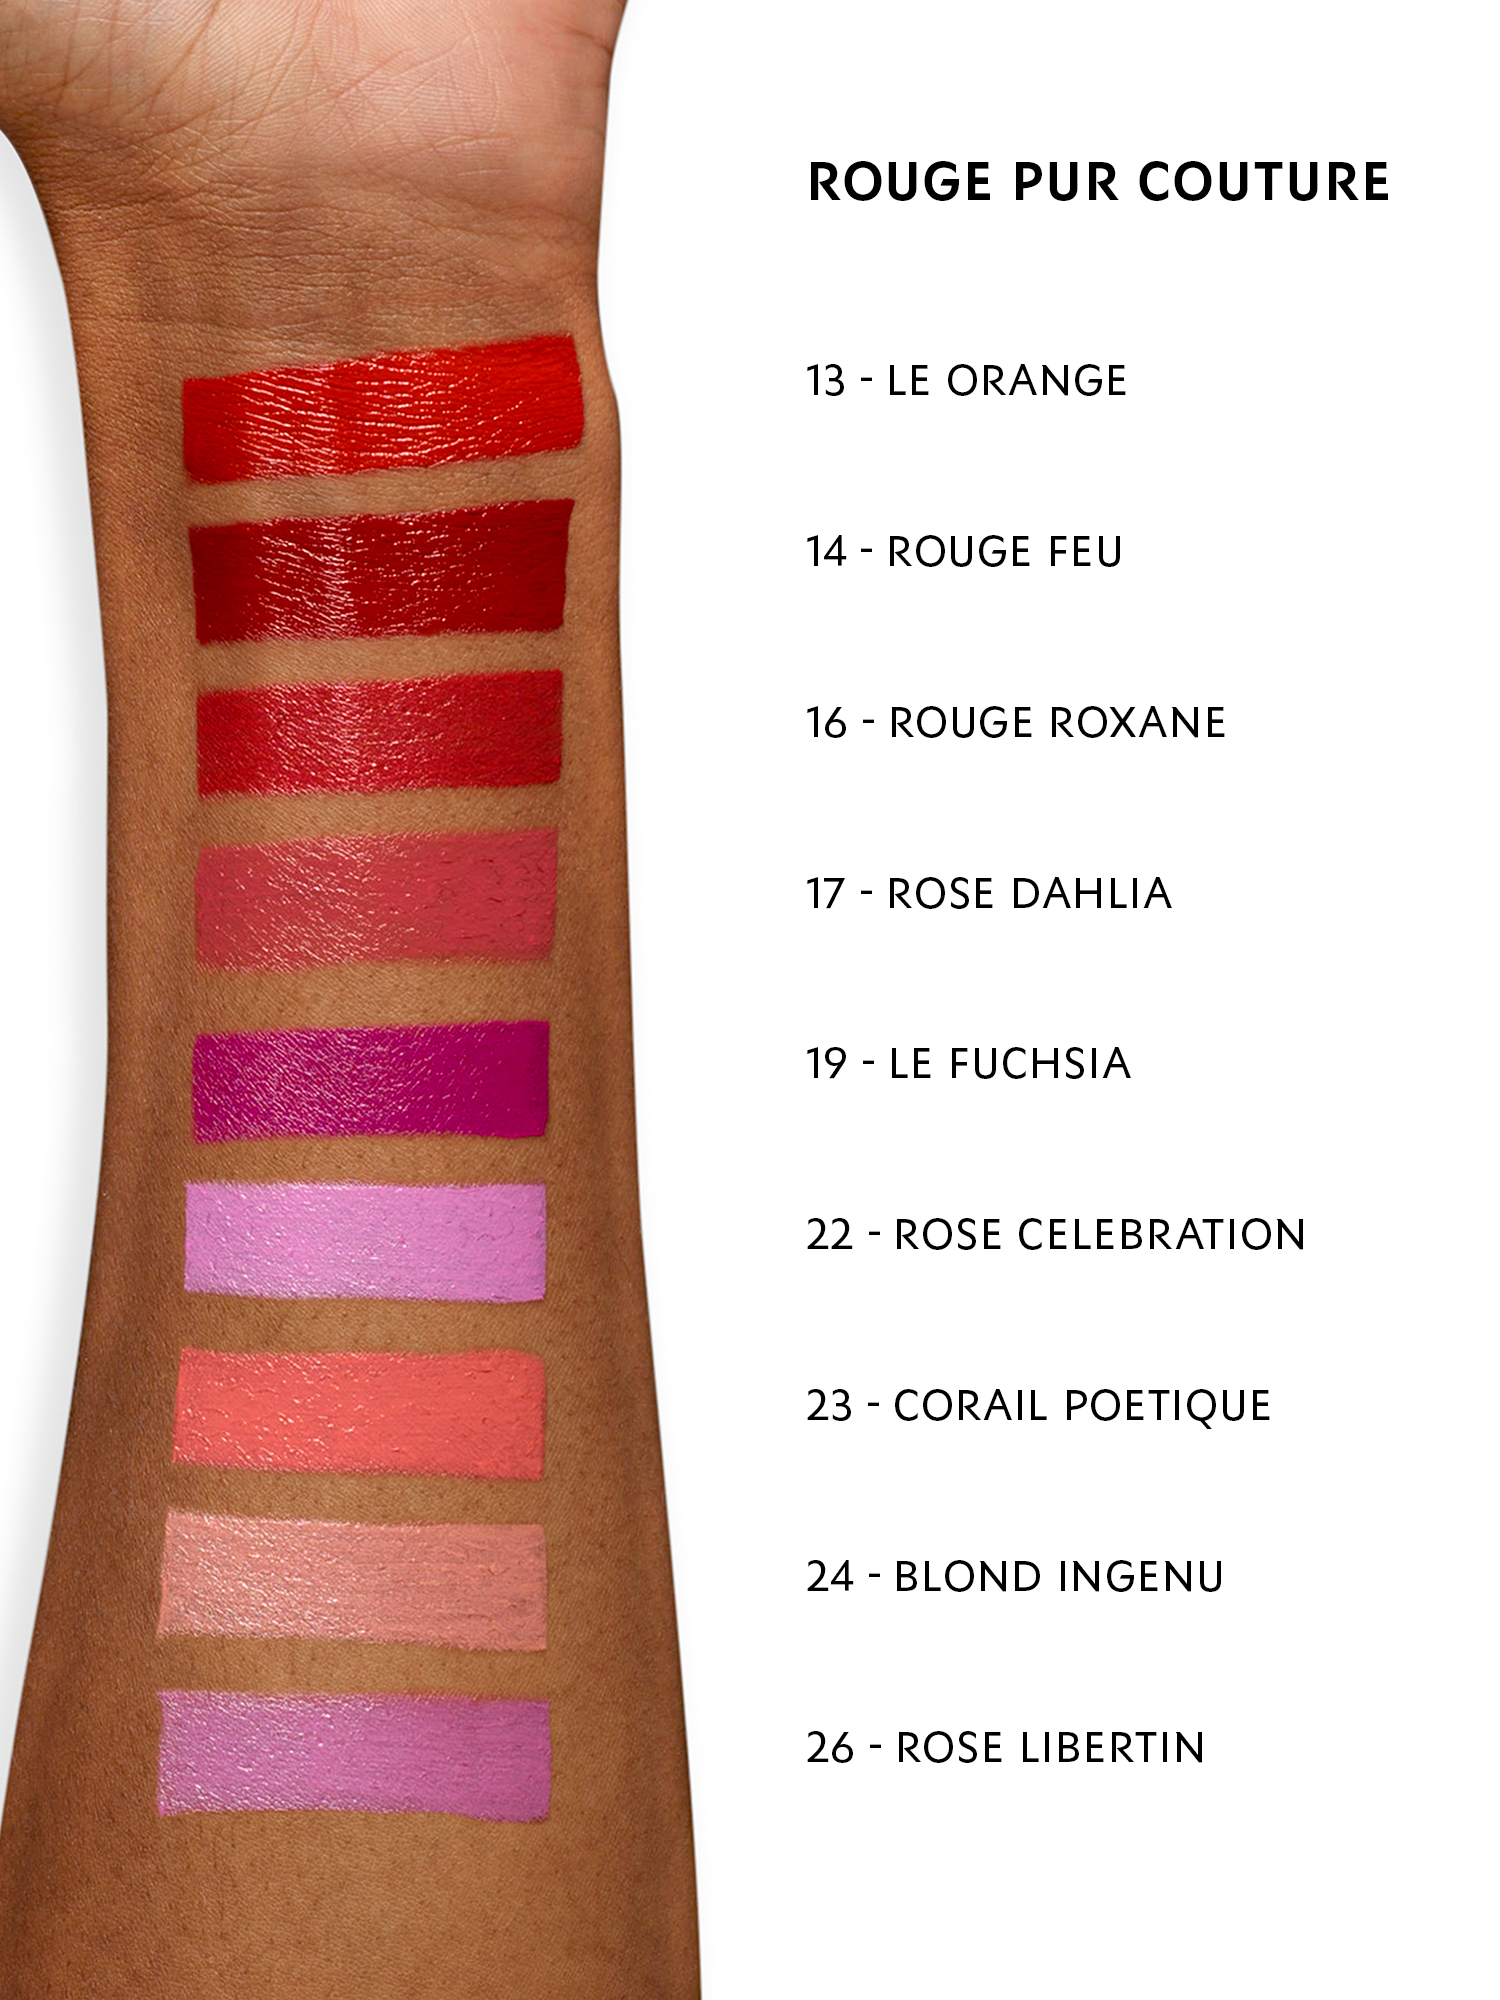  Rouge Pur Couture Lipstick, 13 Le Orange